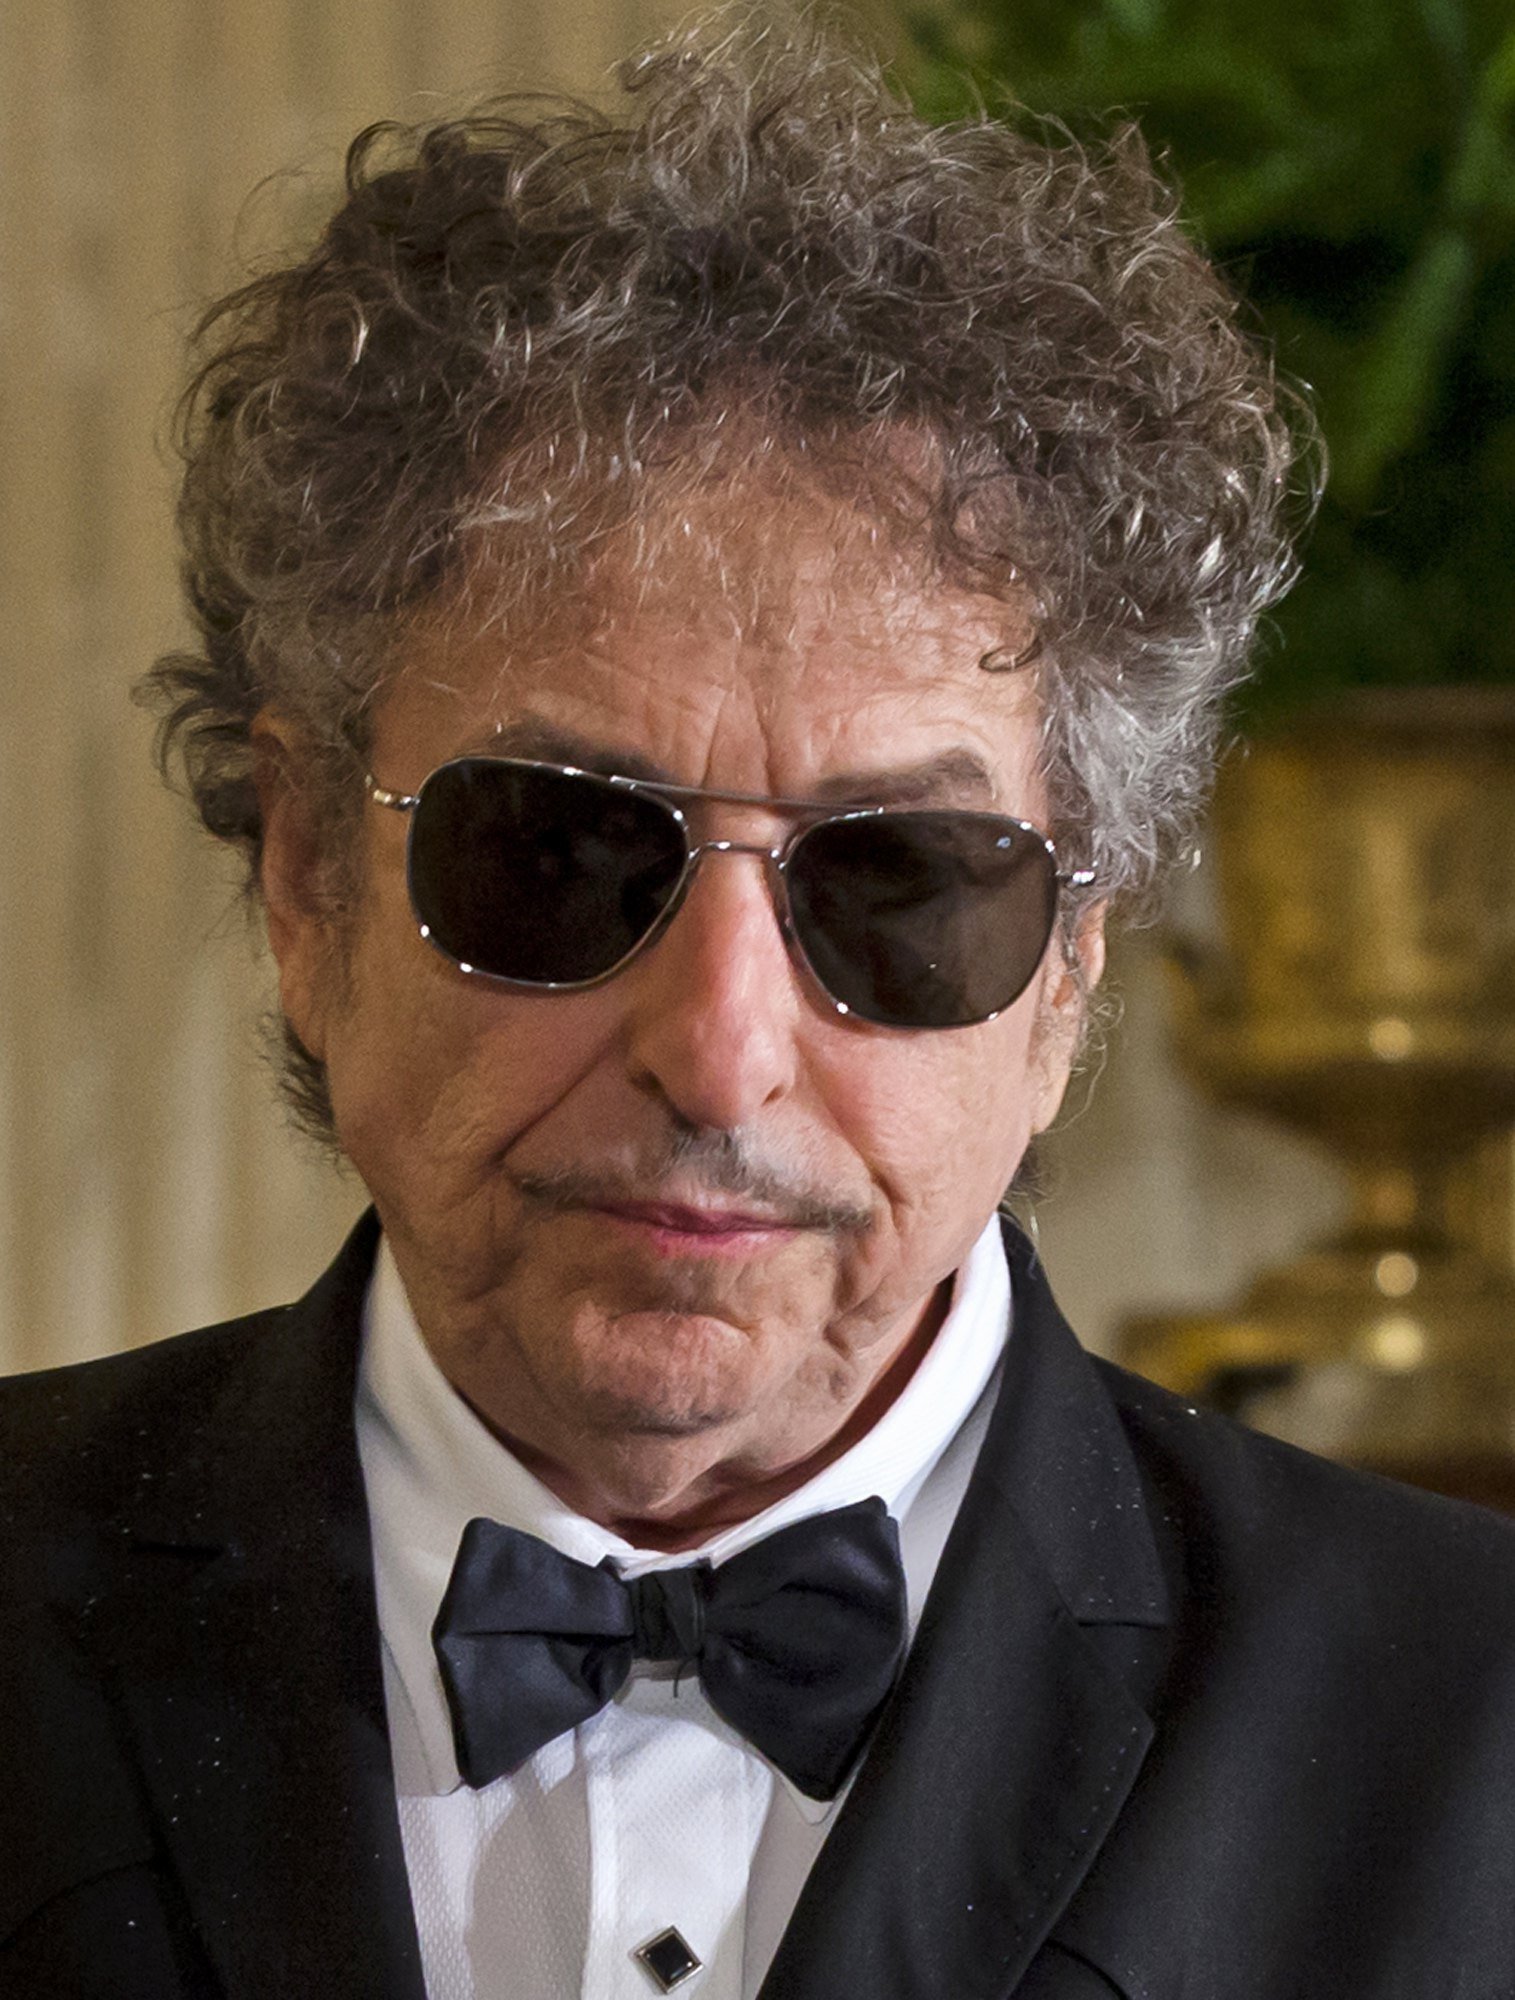 GALERIA: Bob Dylan, d'acústic a elèctric